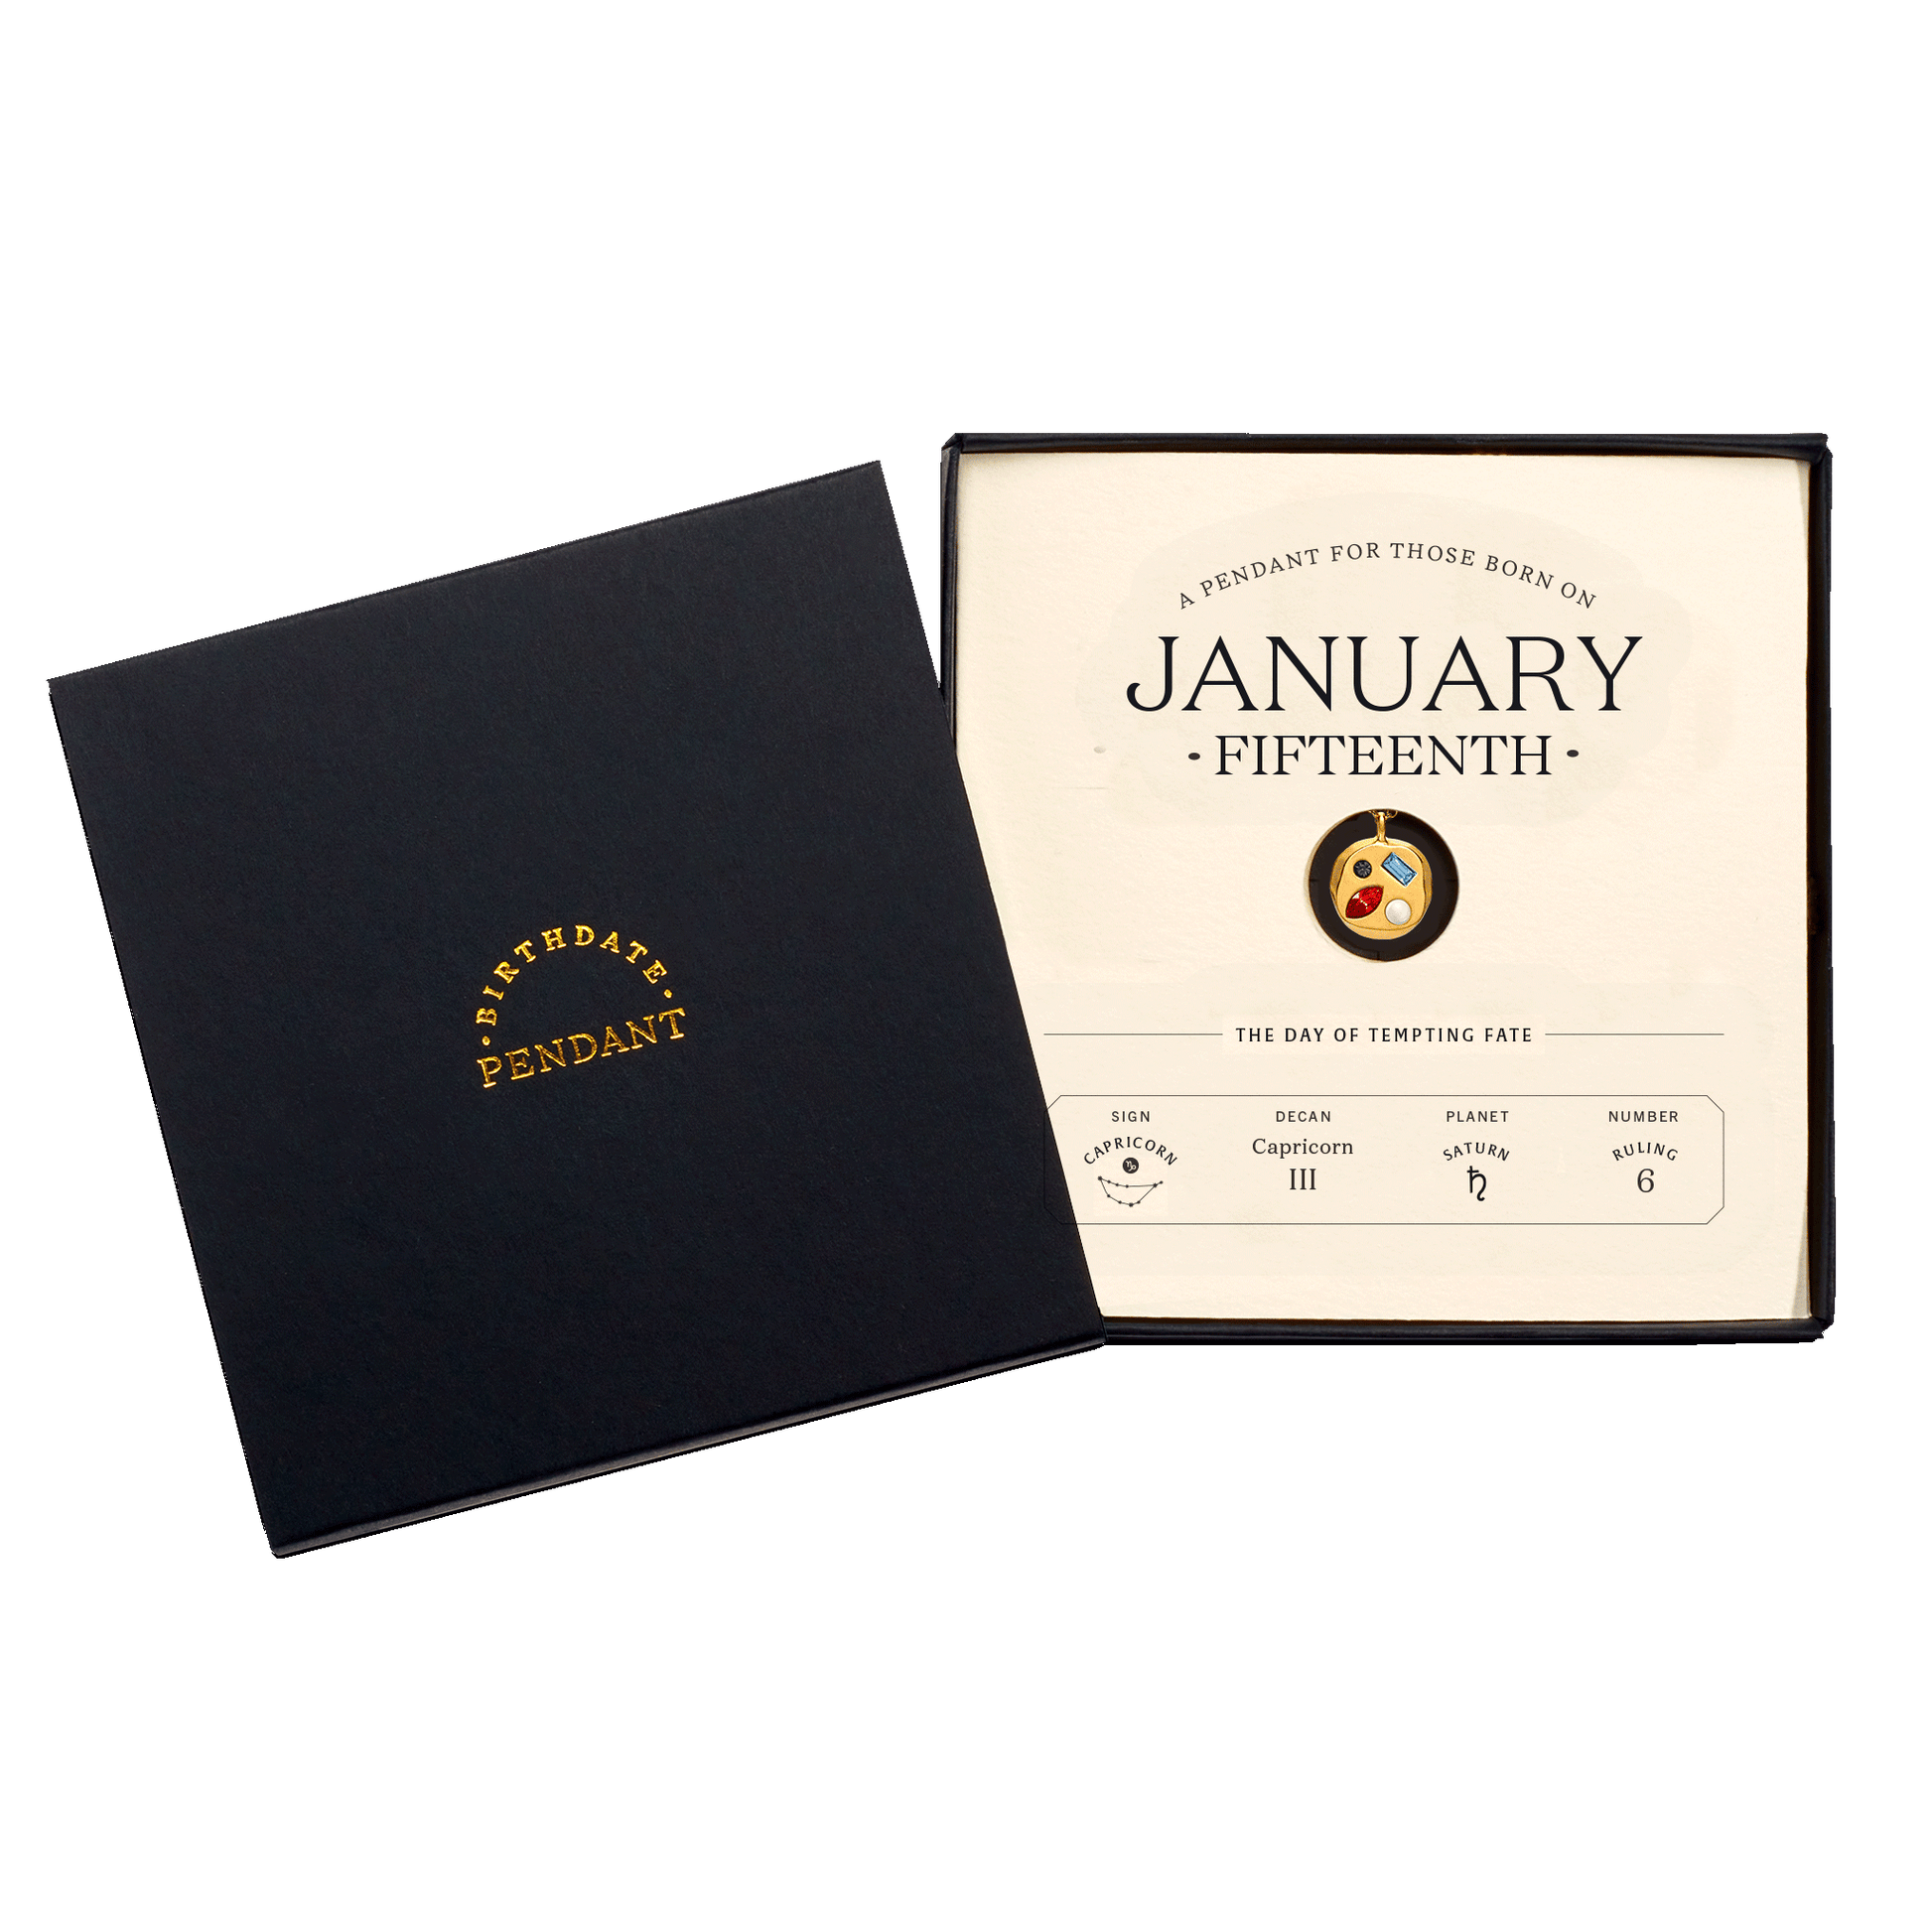 The January Fifteenth Pendant inside its box